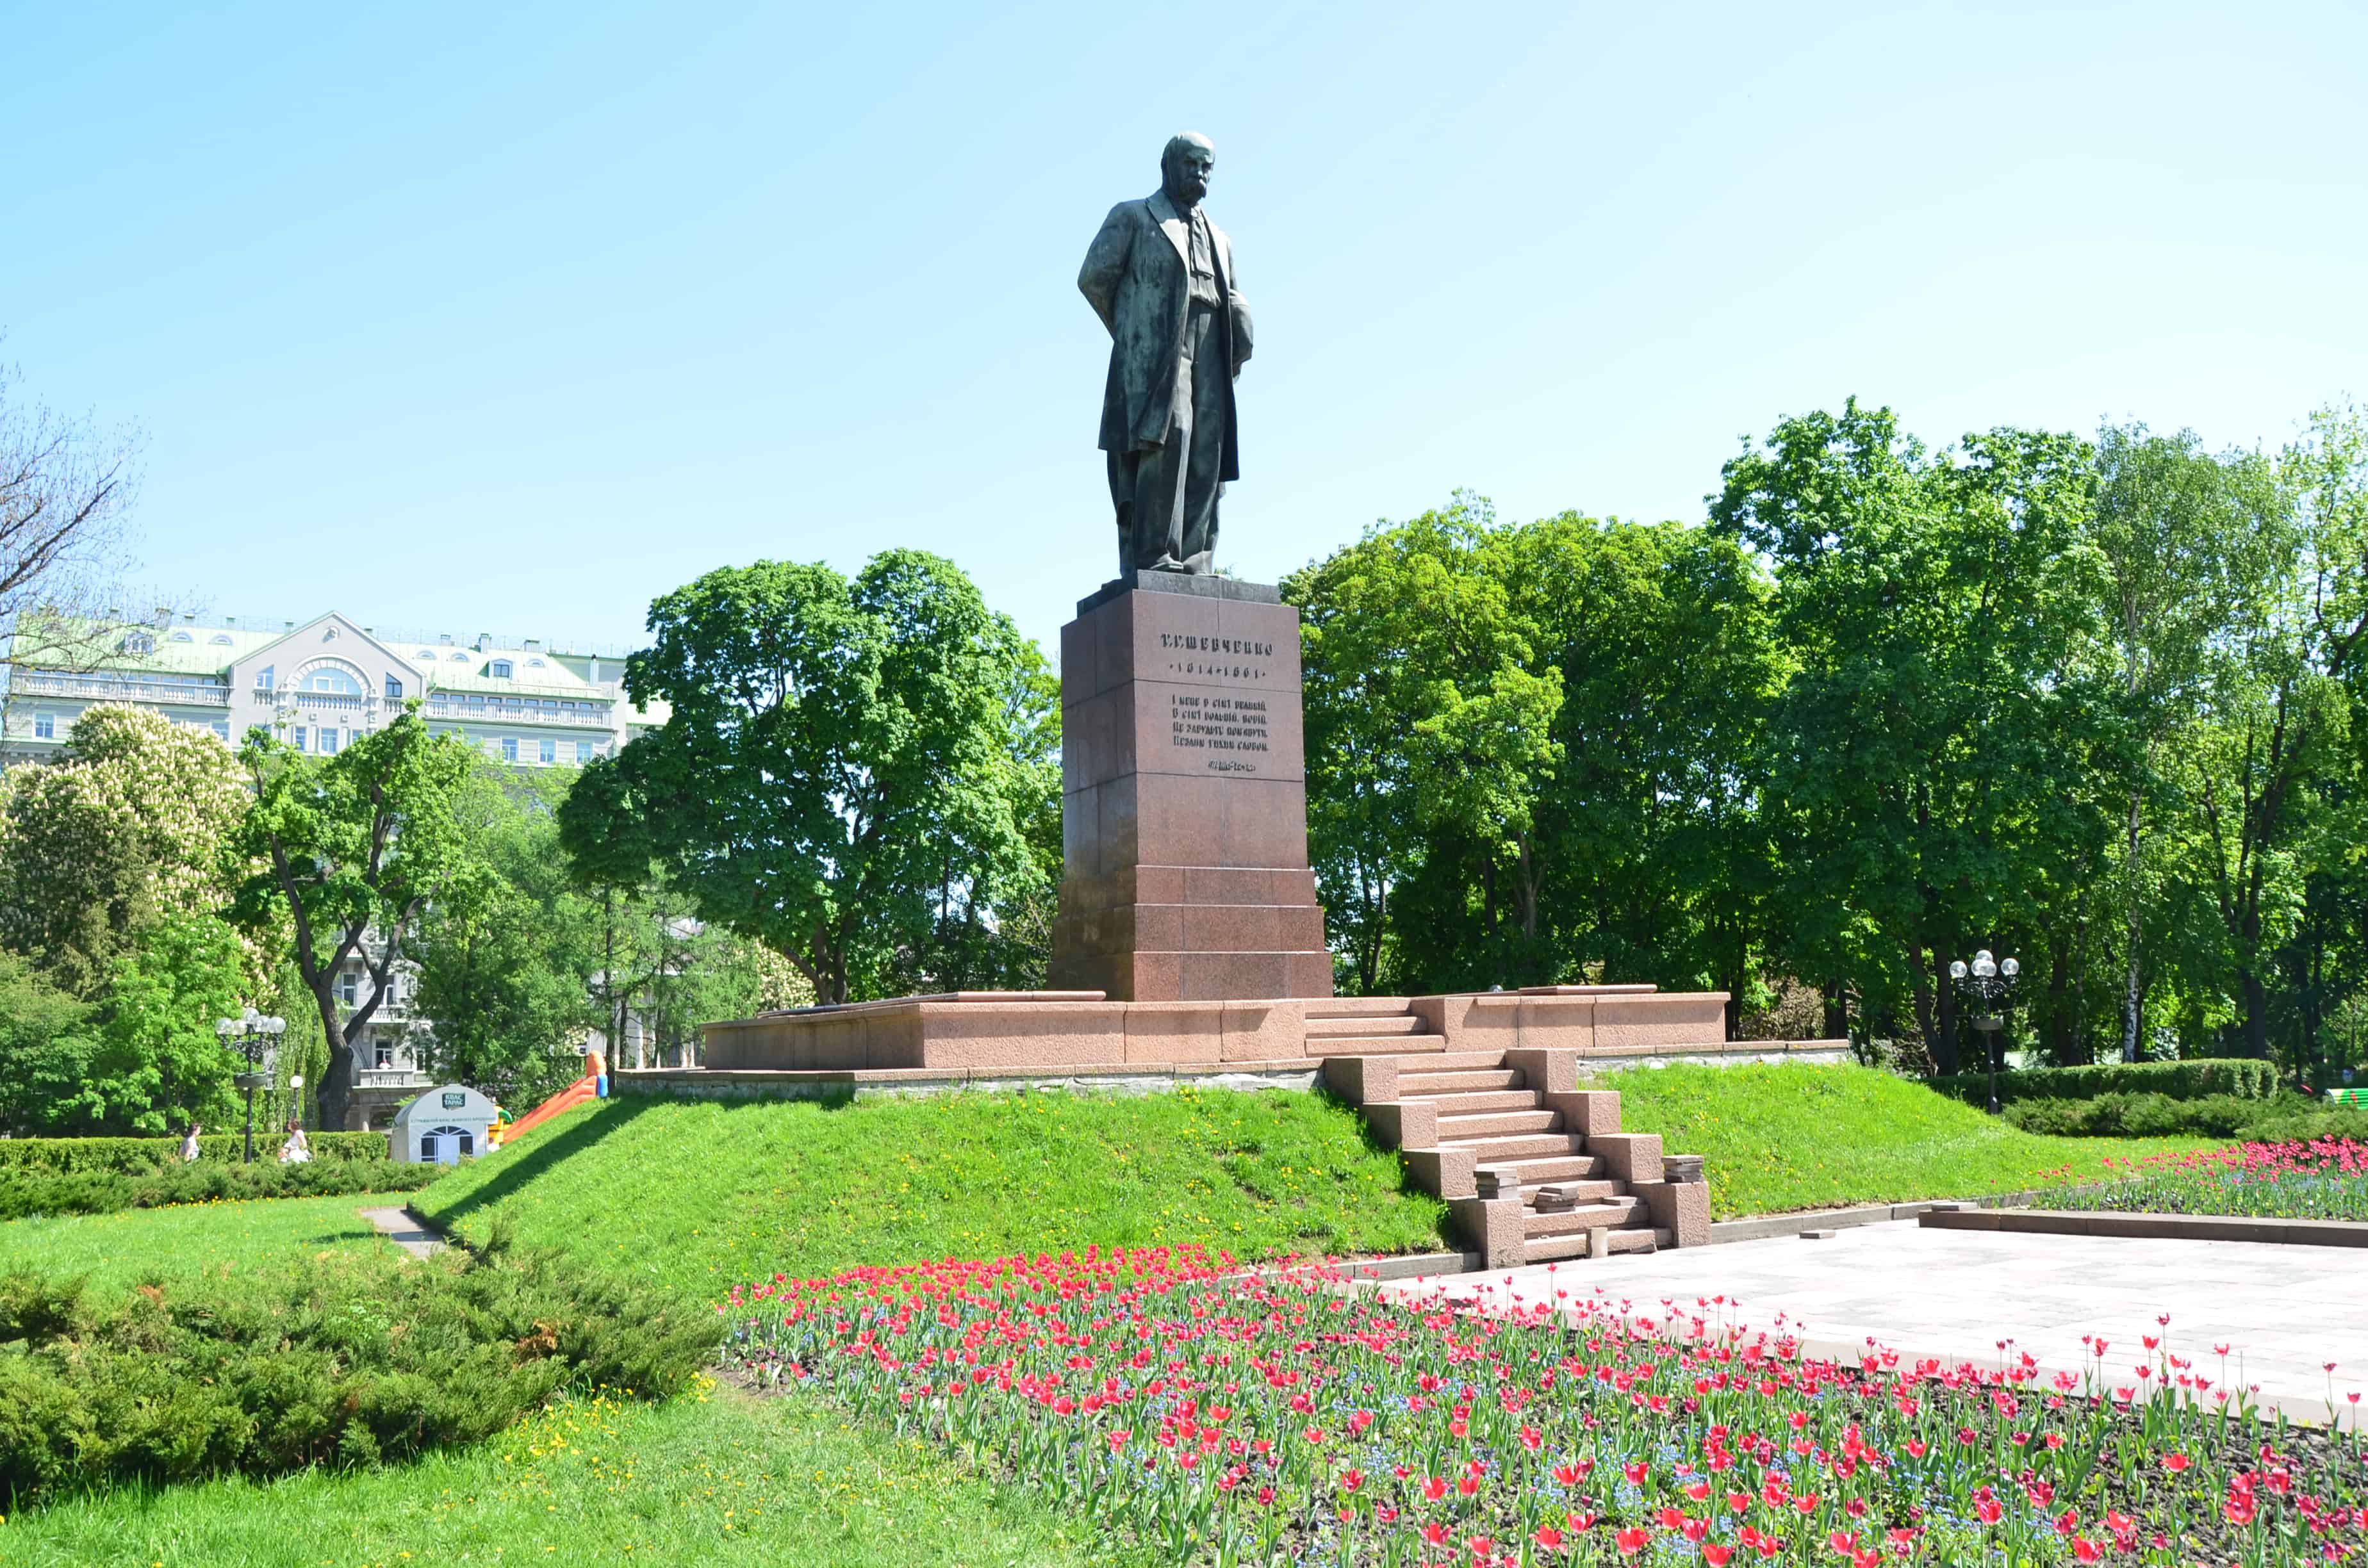 Taras Shevchenko Park in Kyiv, Ukraine